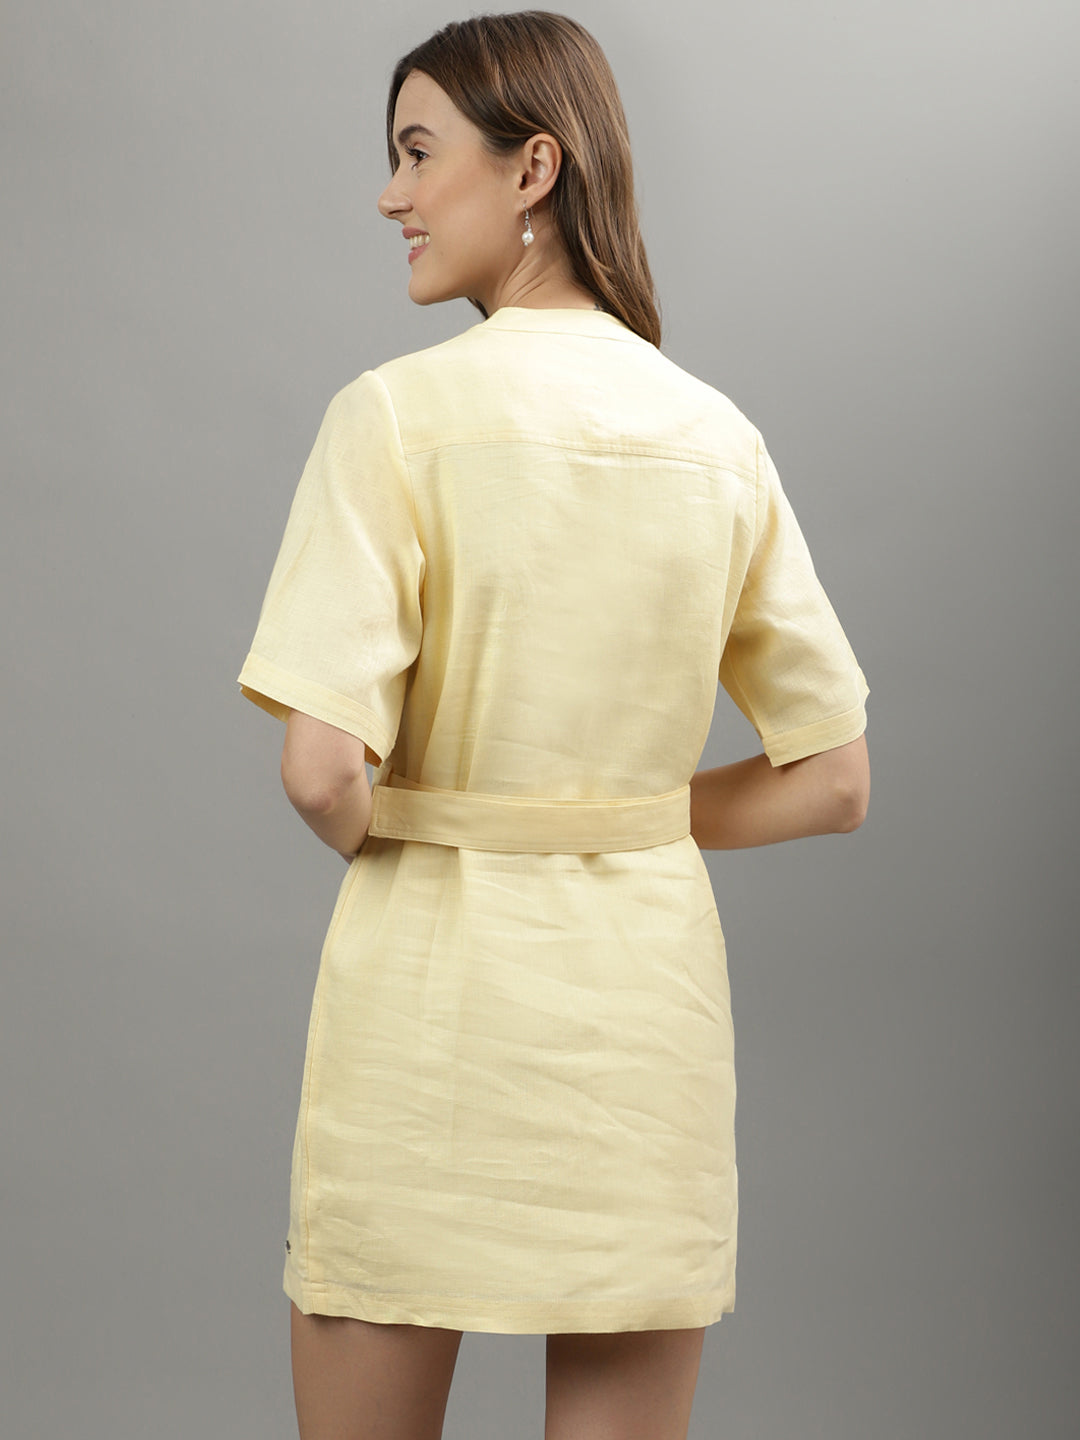 Iconic Women Yellow Solid Band Collar Dress